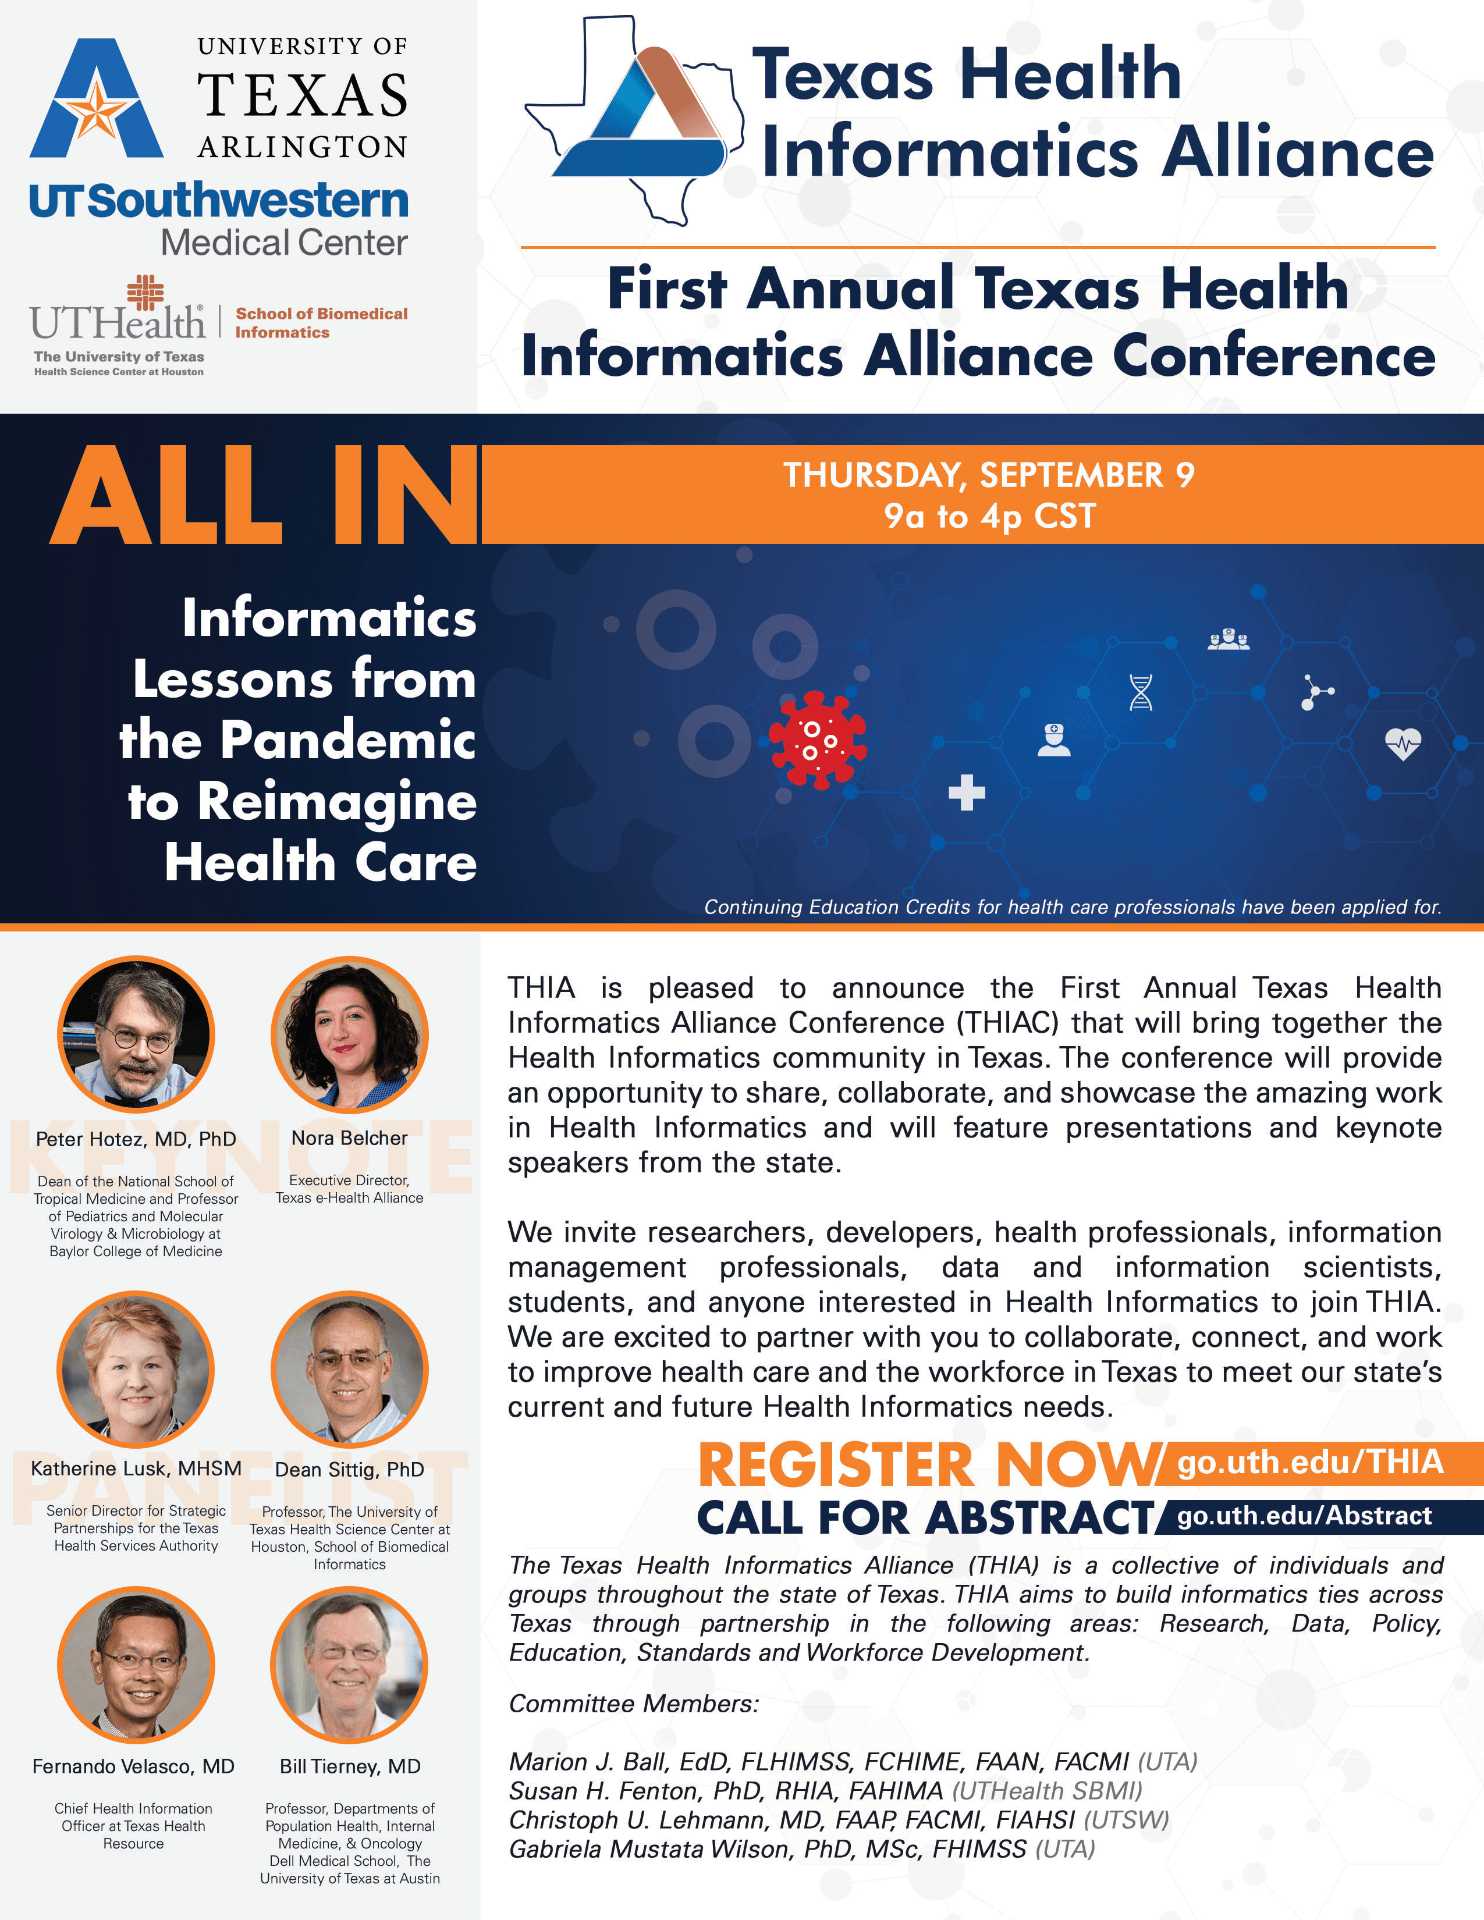 Texas Health Informatics Alliance 2021